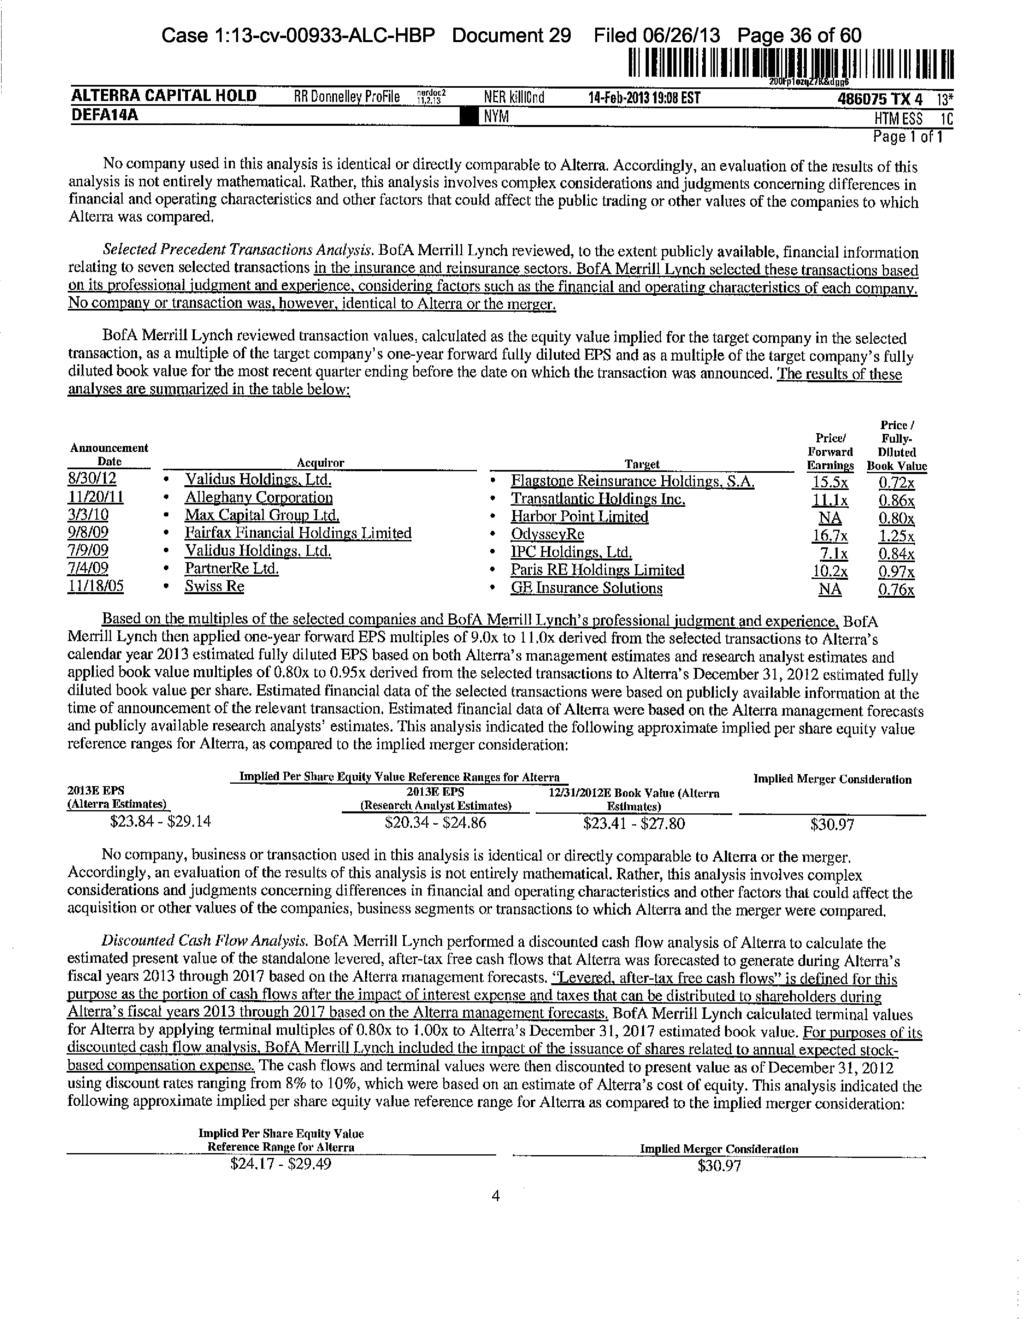 Case 1:13-cv-00933-ALC-HBP Document 29 Filed 06/26/13 P 36 of 60 ALTERRA CAPITAL HOLD DEFA1 4A RR Donnelley ProFile III I[IIIIII I 11111 -feb-2013 19:D EST!